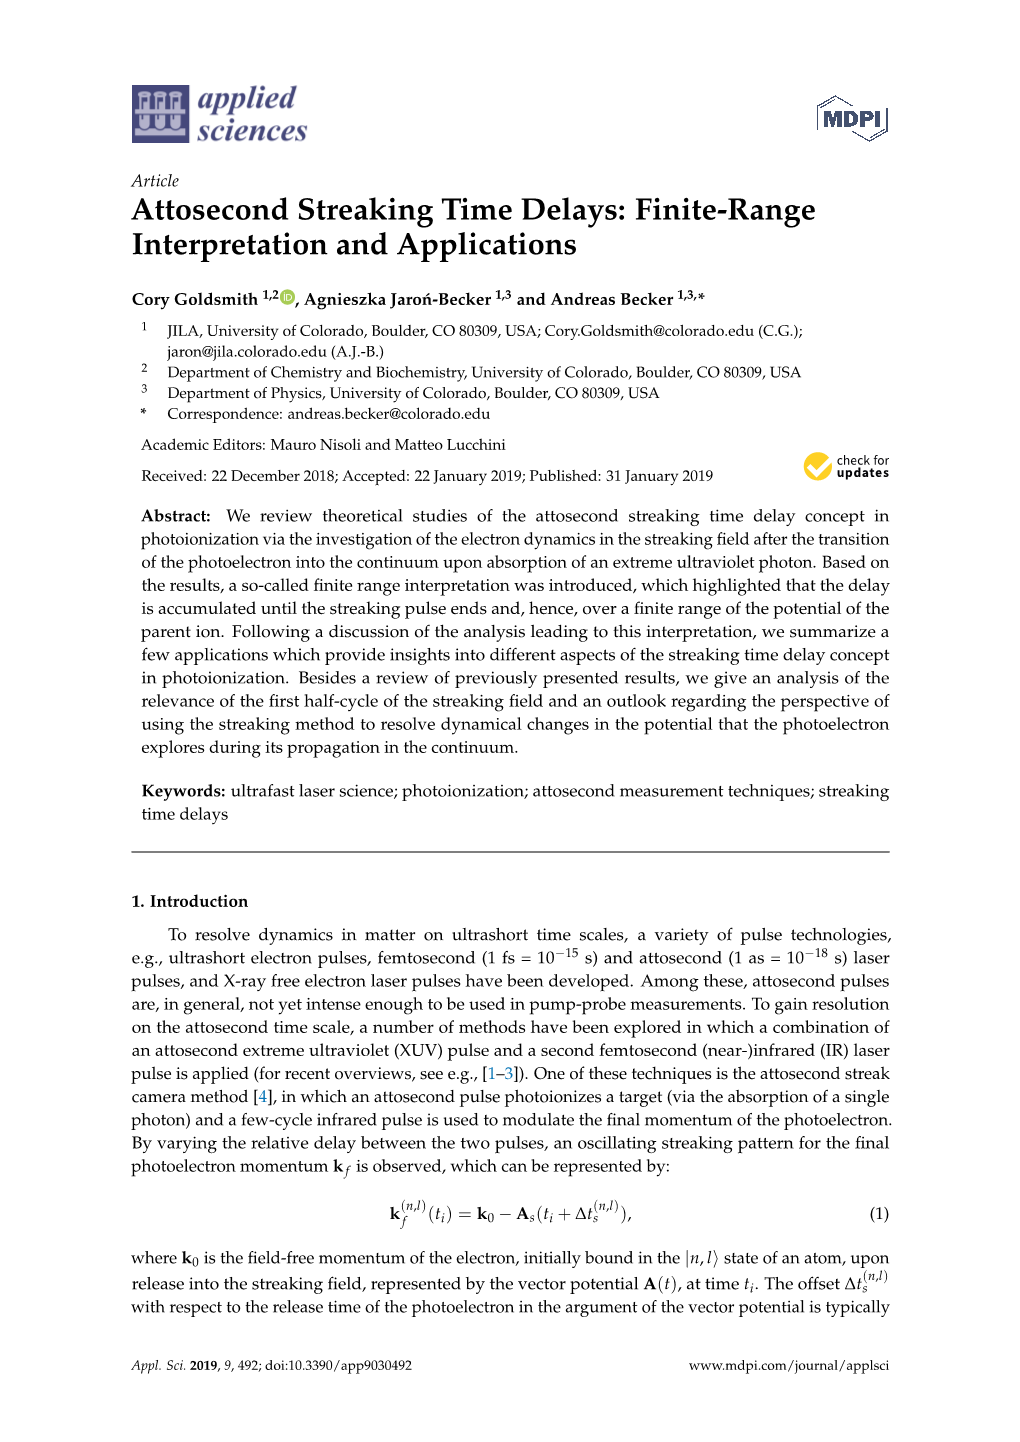 Attosecond Streaking Time Delays: Finite-Range Interpretation and Applications